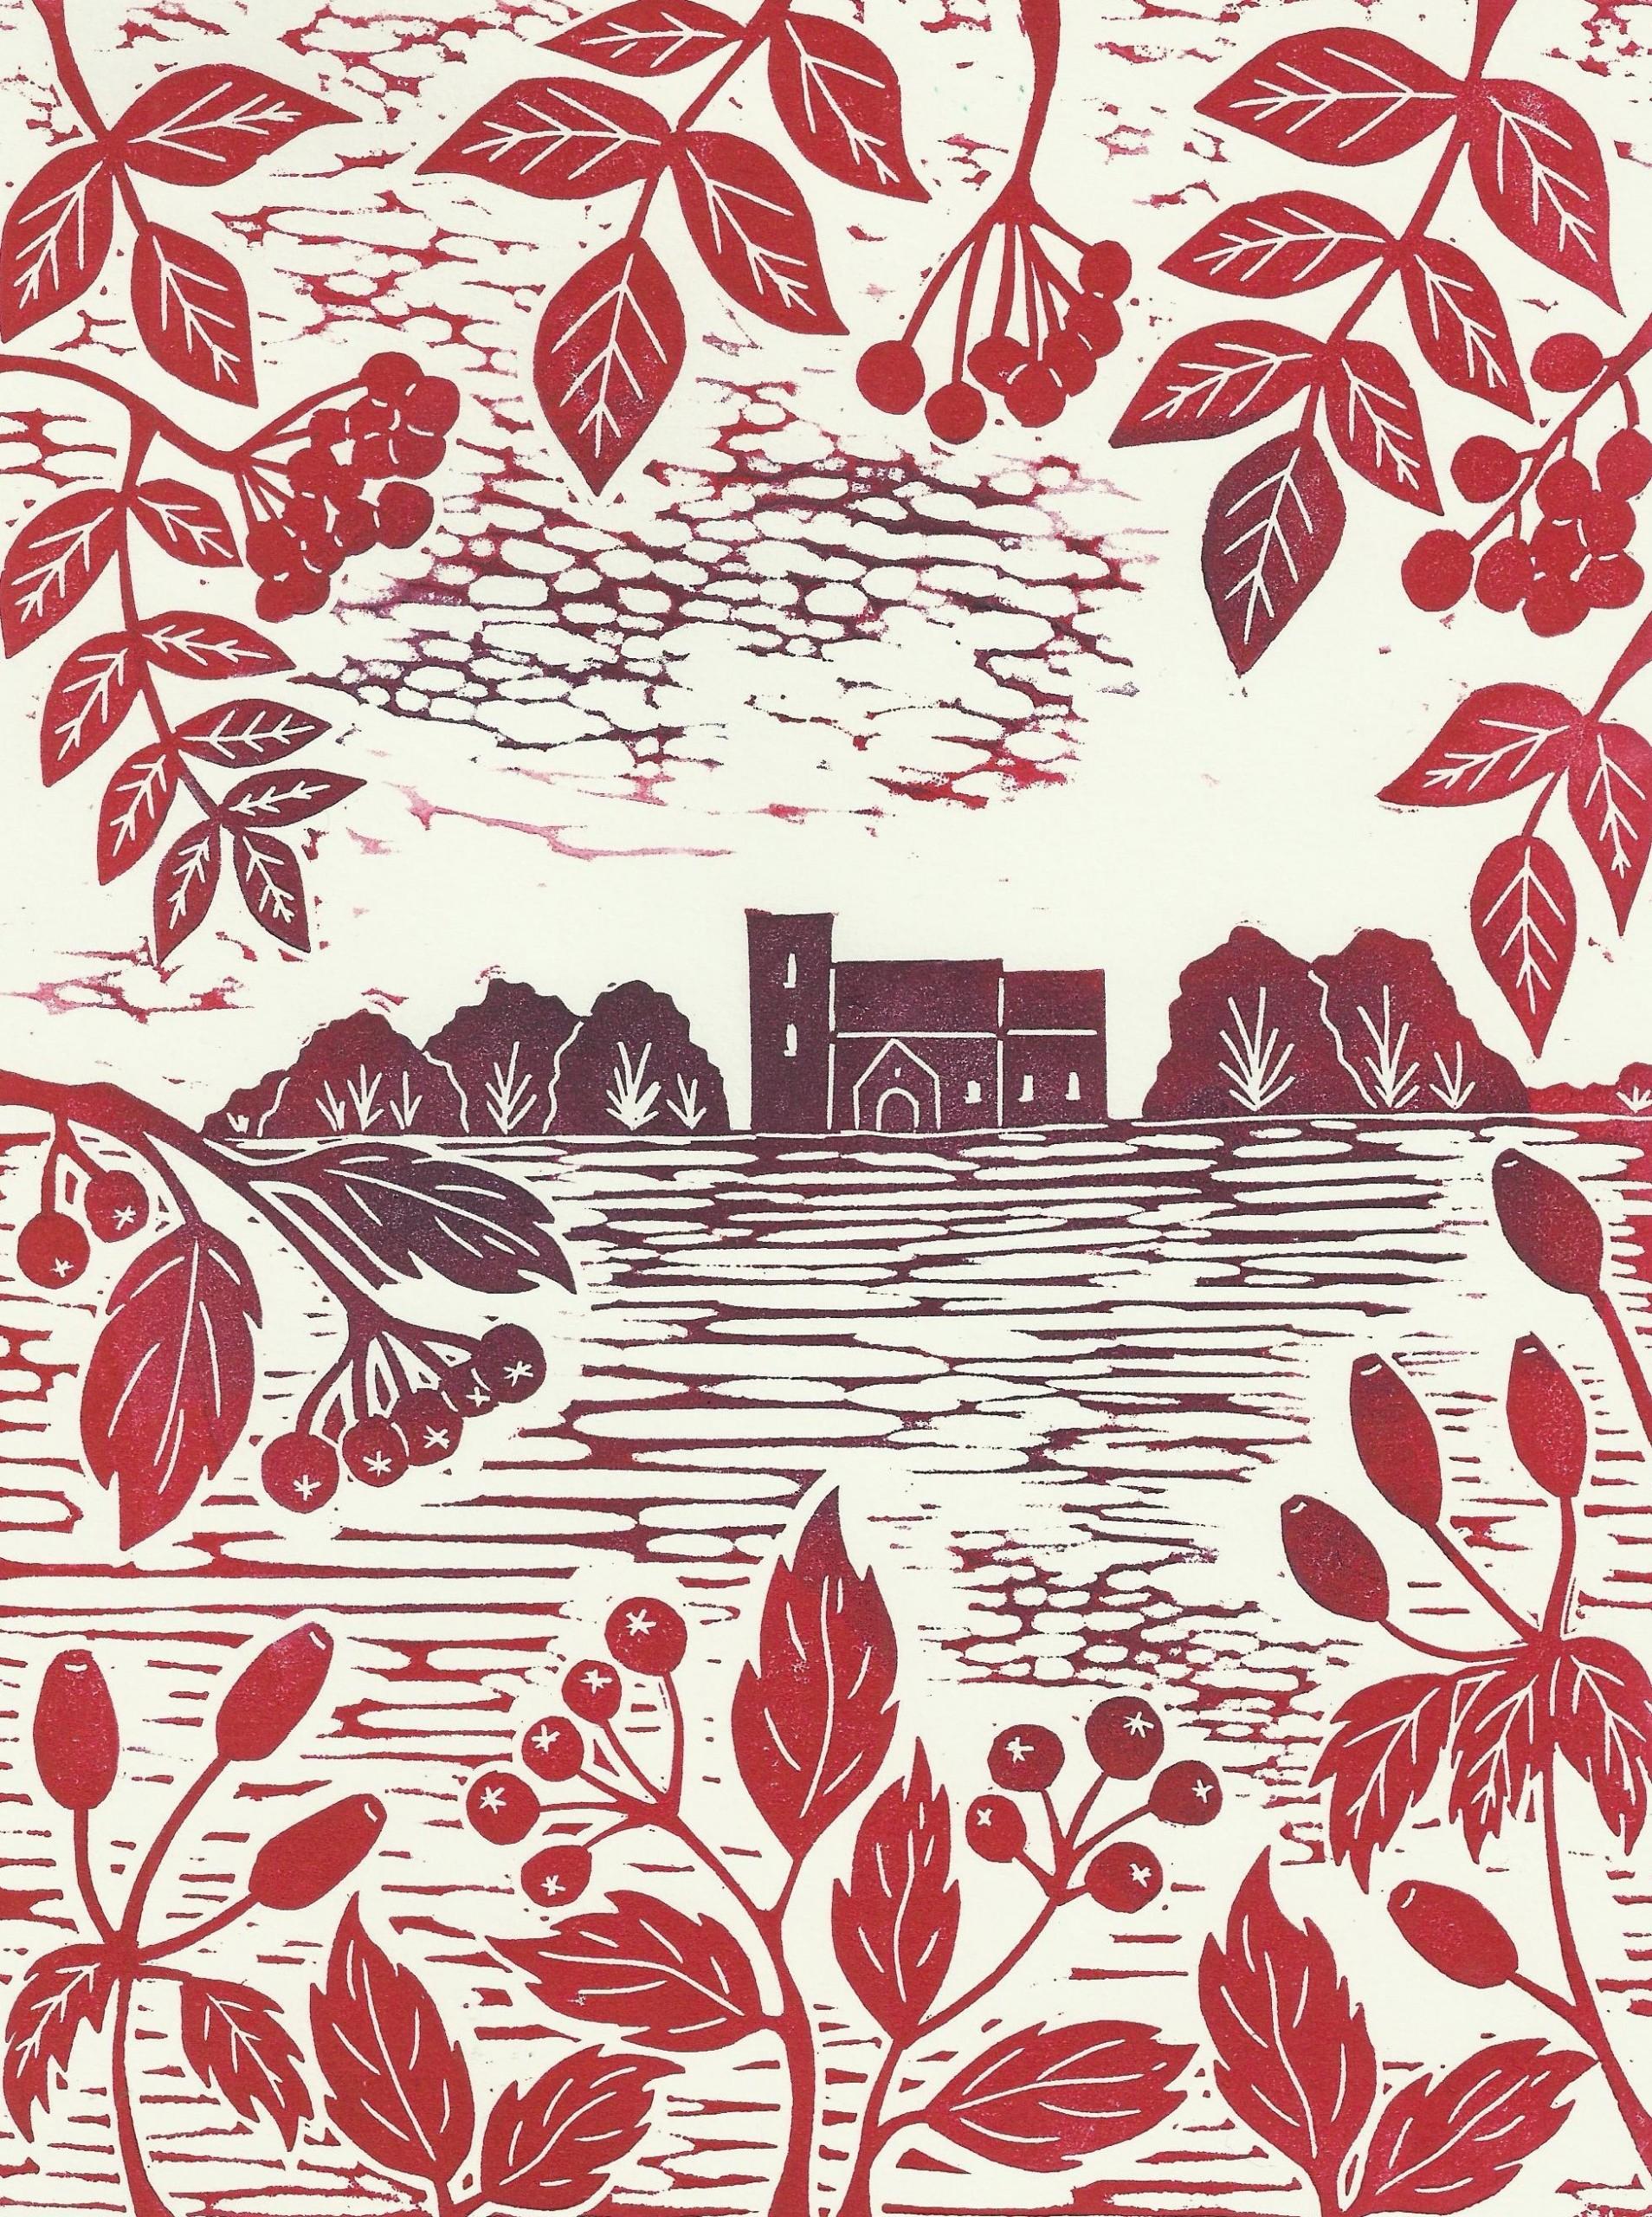 Autumn Berries, Norfolk Broads Marsh Harrier and Sheringham Park - Print by Joanna Padfield